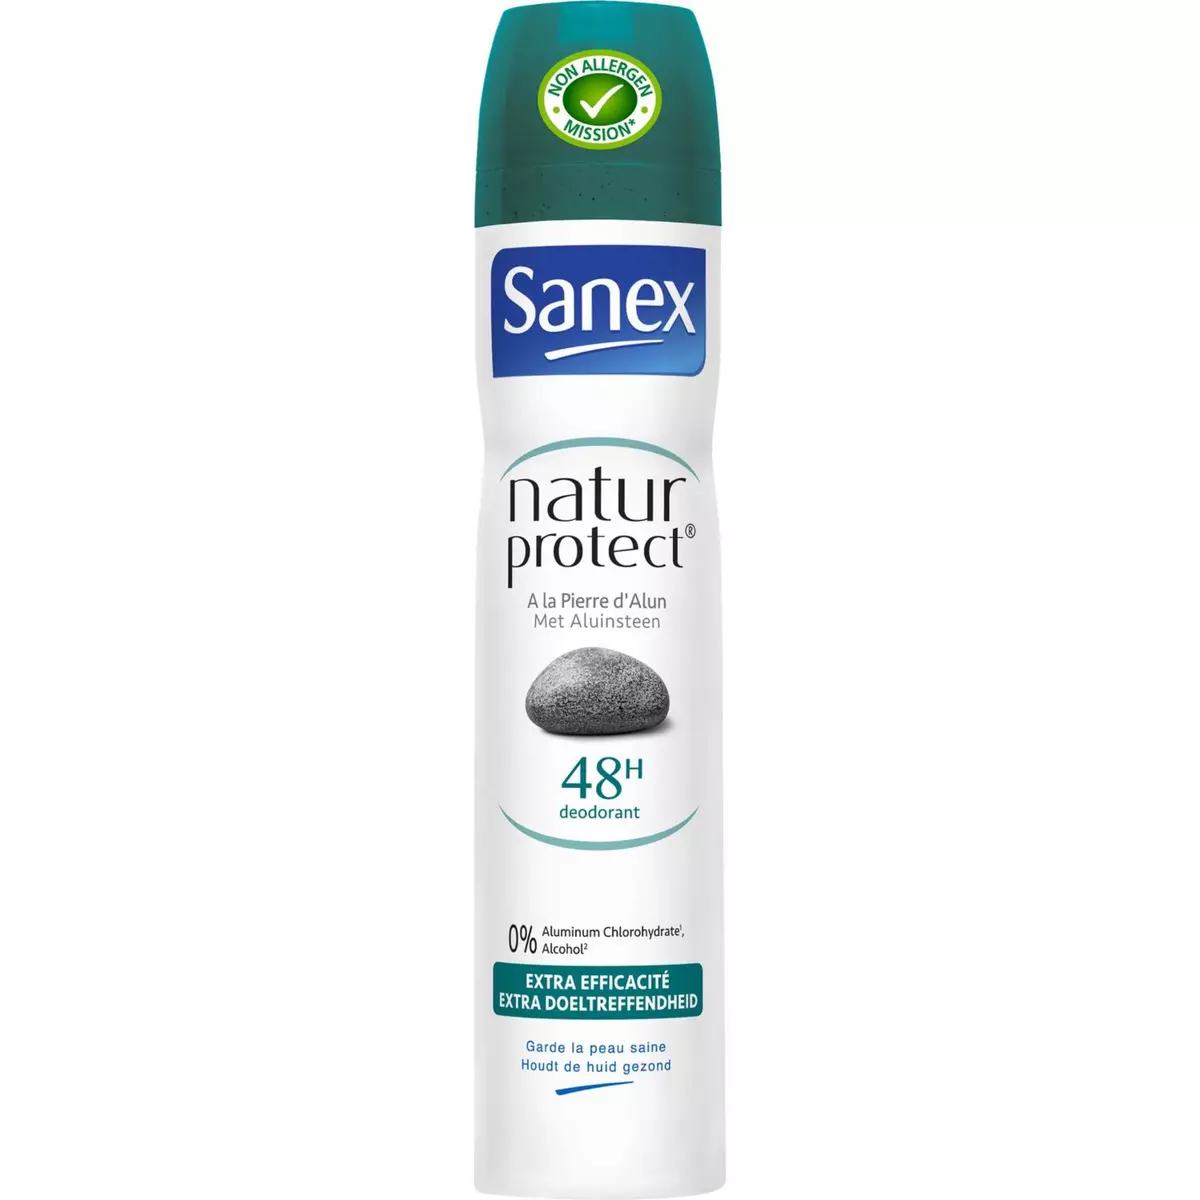 SANEX Natur Protect déodorant spray pierre d'alun extra efficacité 200ml